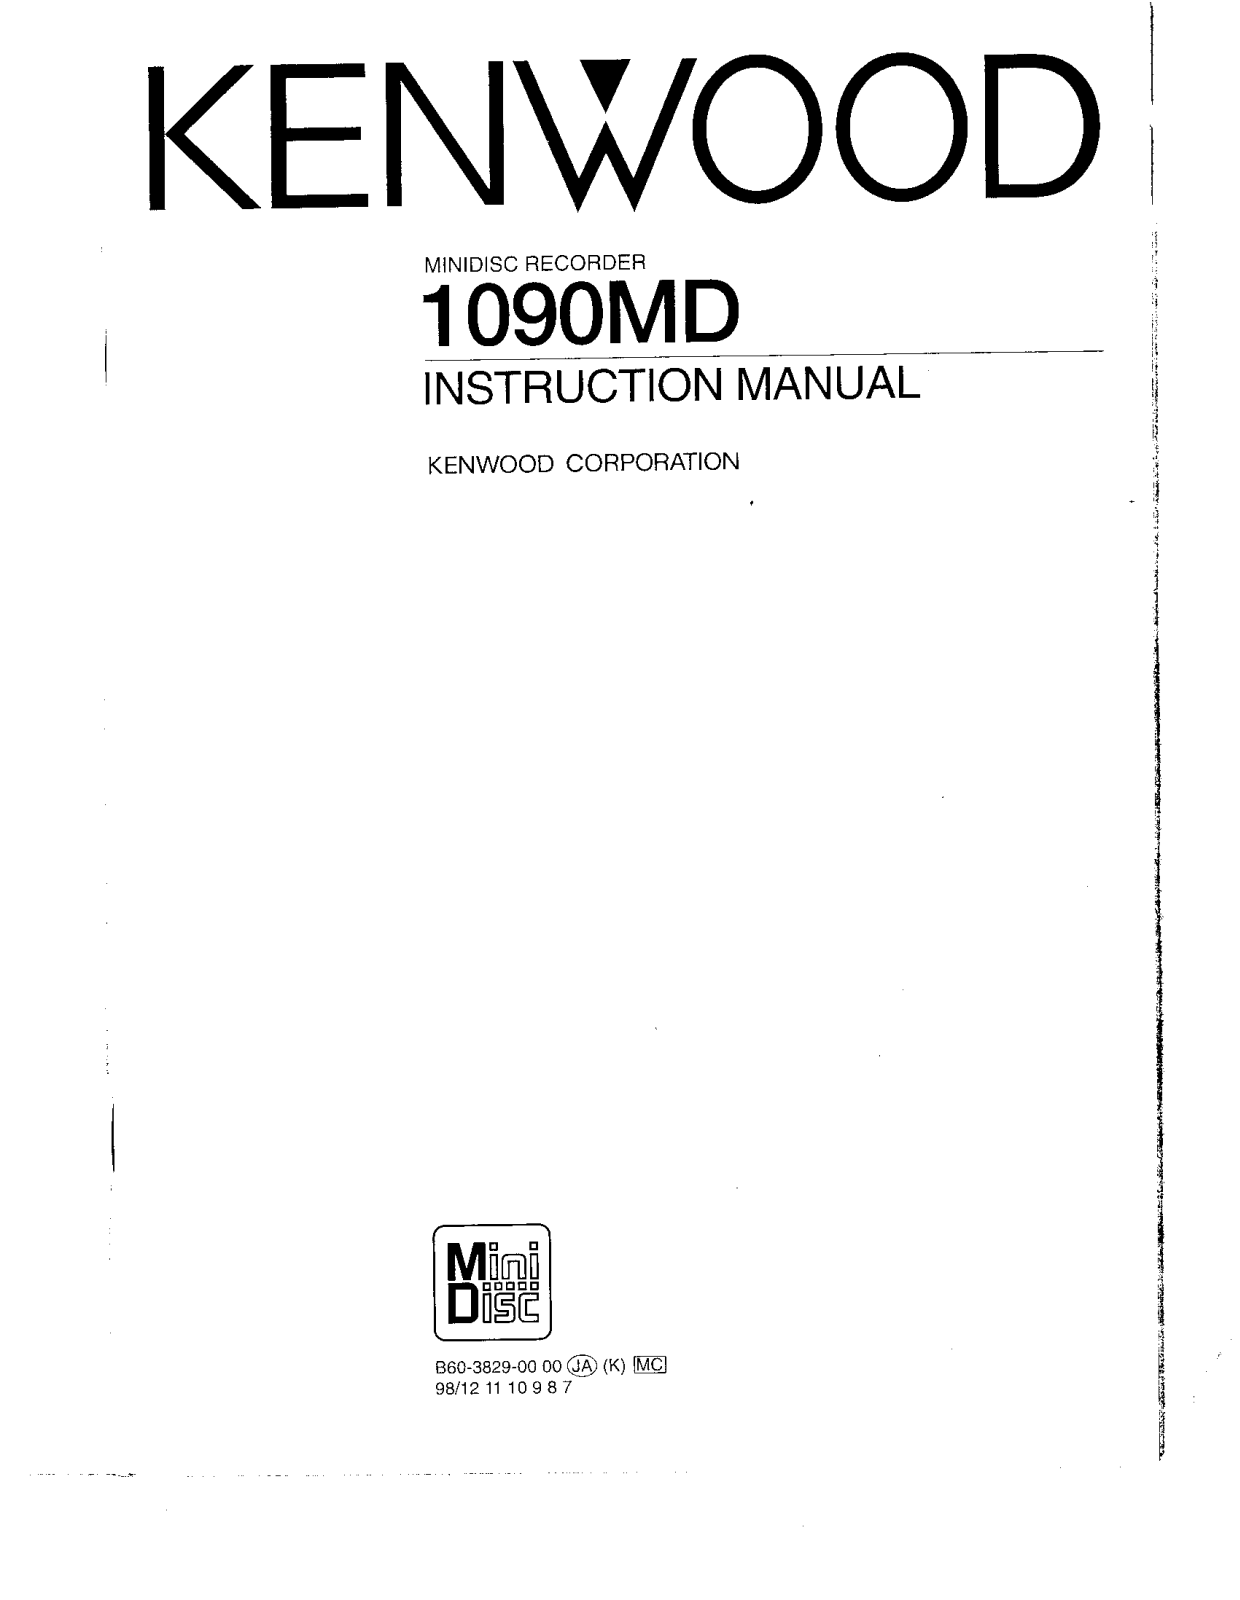 Kenwood 1090MD Owner's Manual